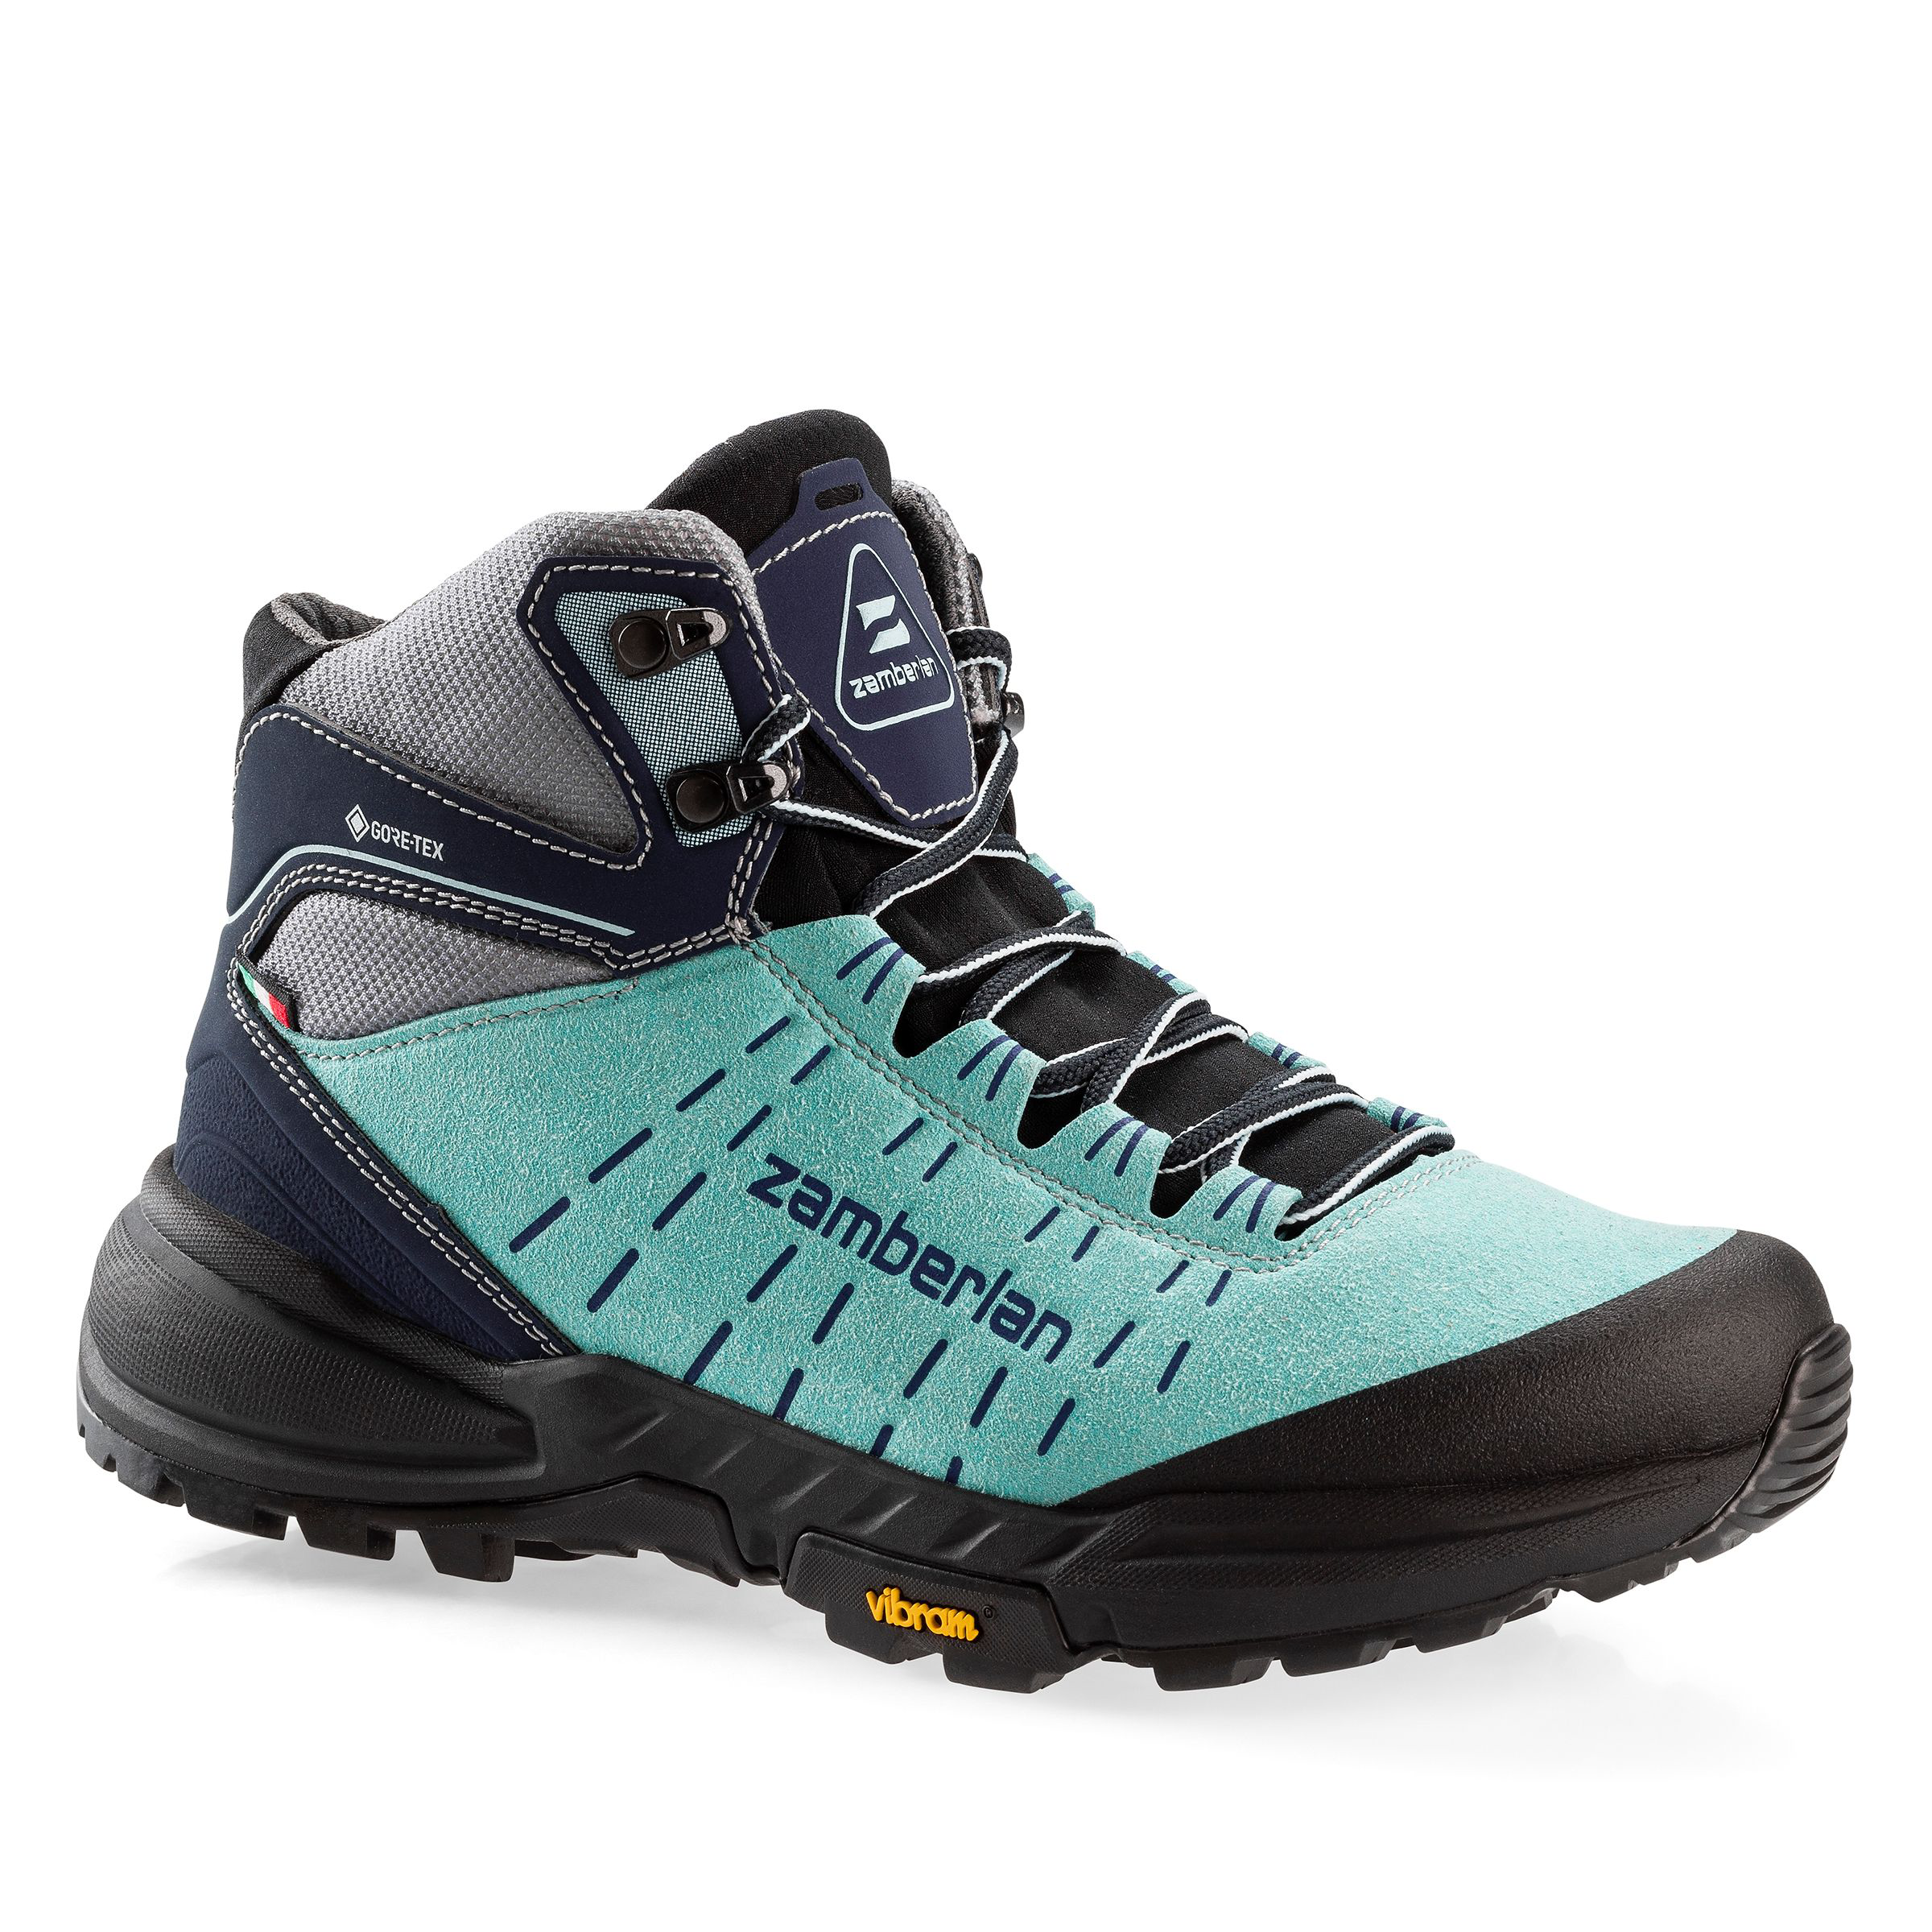 Zamberlan 334 Circe GTX Waterproof Hiking Boots for Ladies - Blue - 9M